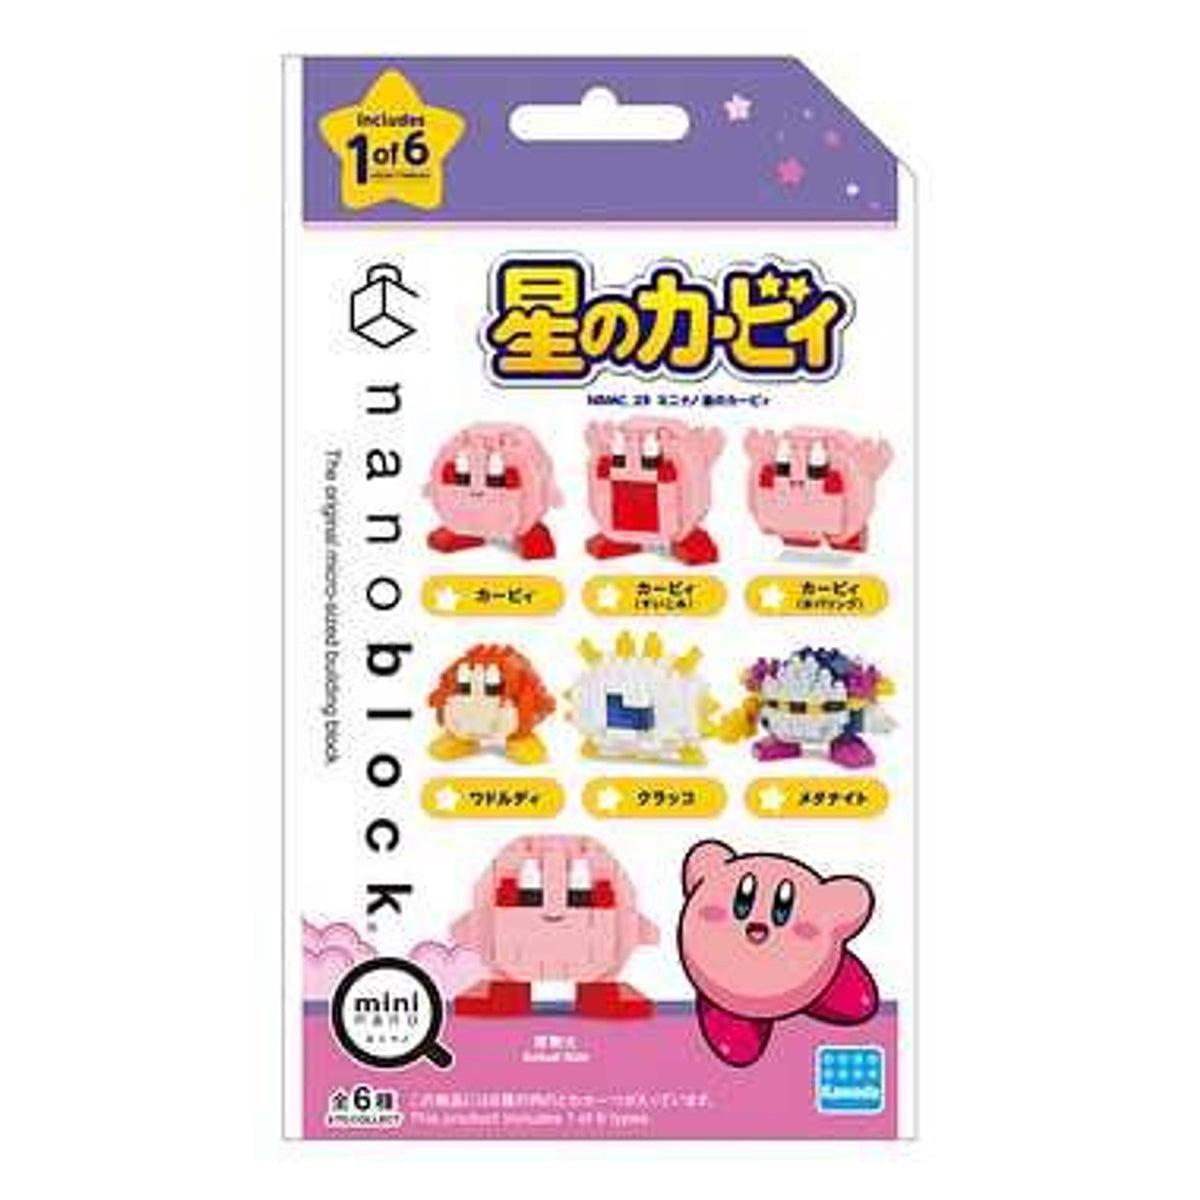 Nanoblocks - Kirby Assorted Characters - Blind Box